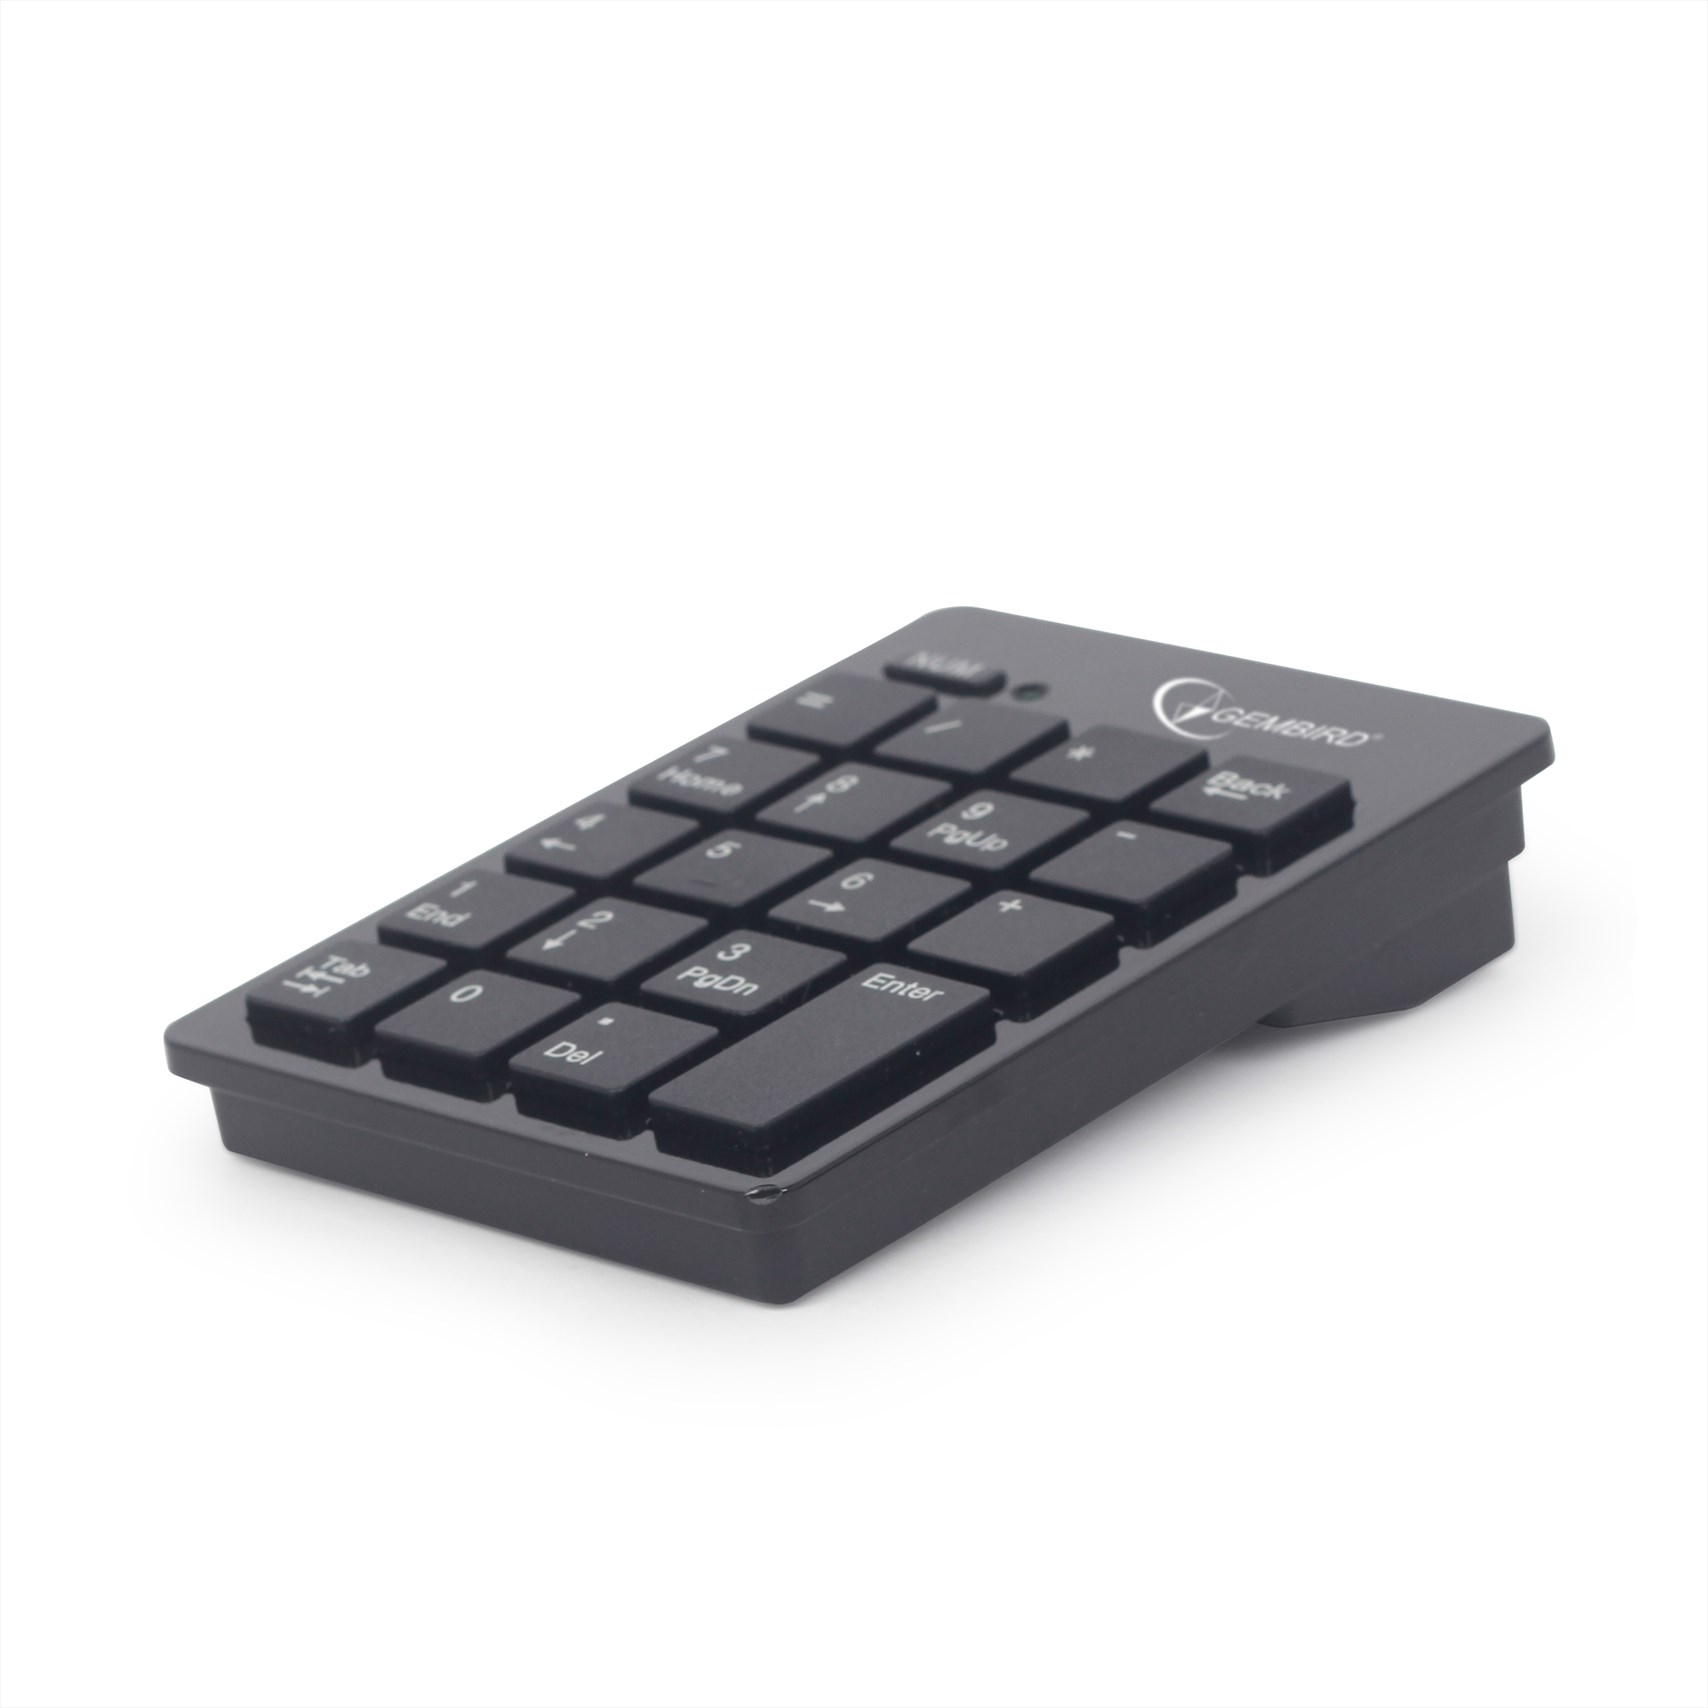 Draadloos toetsenbord met USB | HB-Electronica